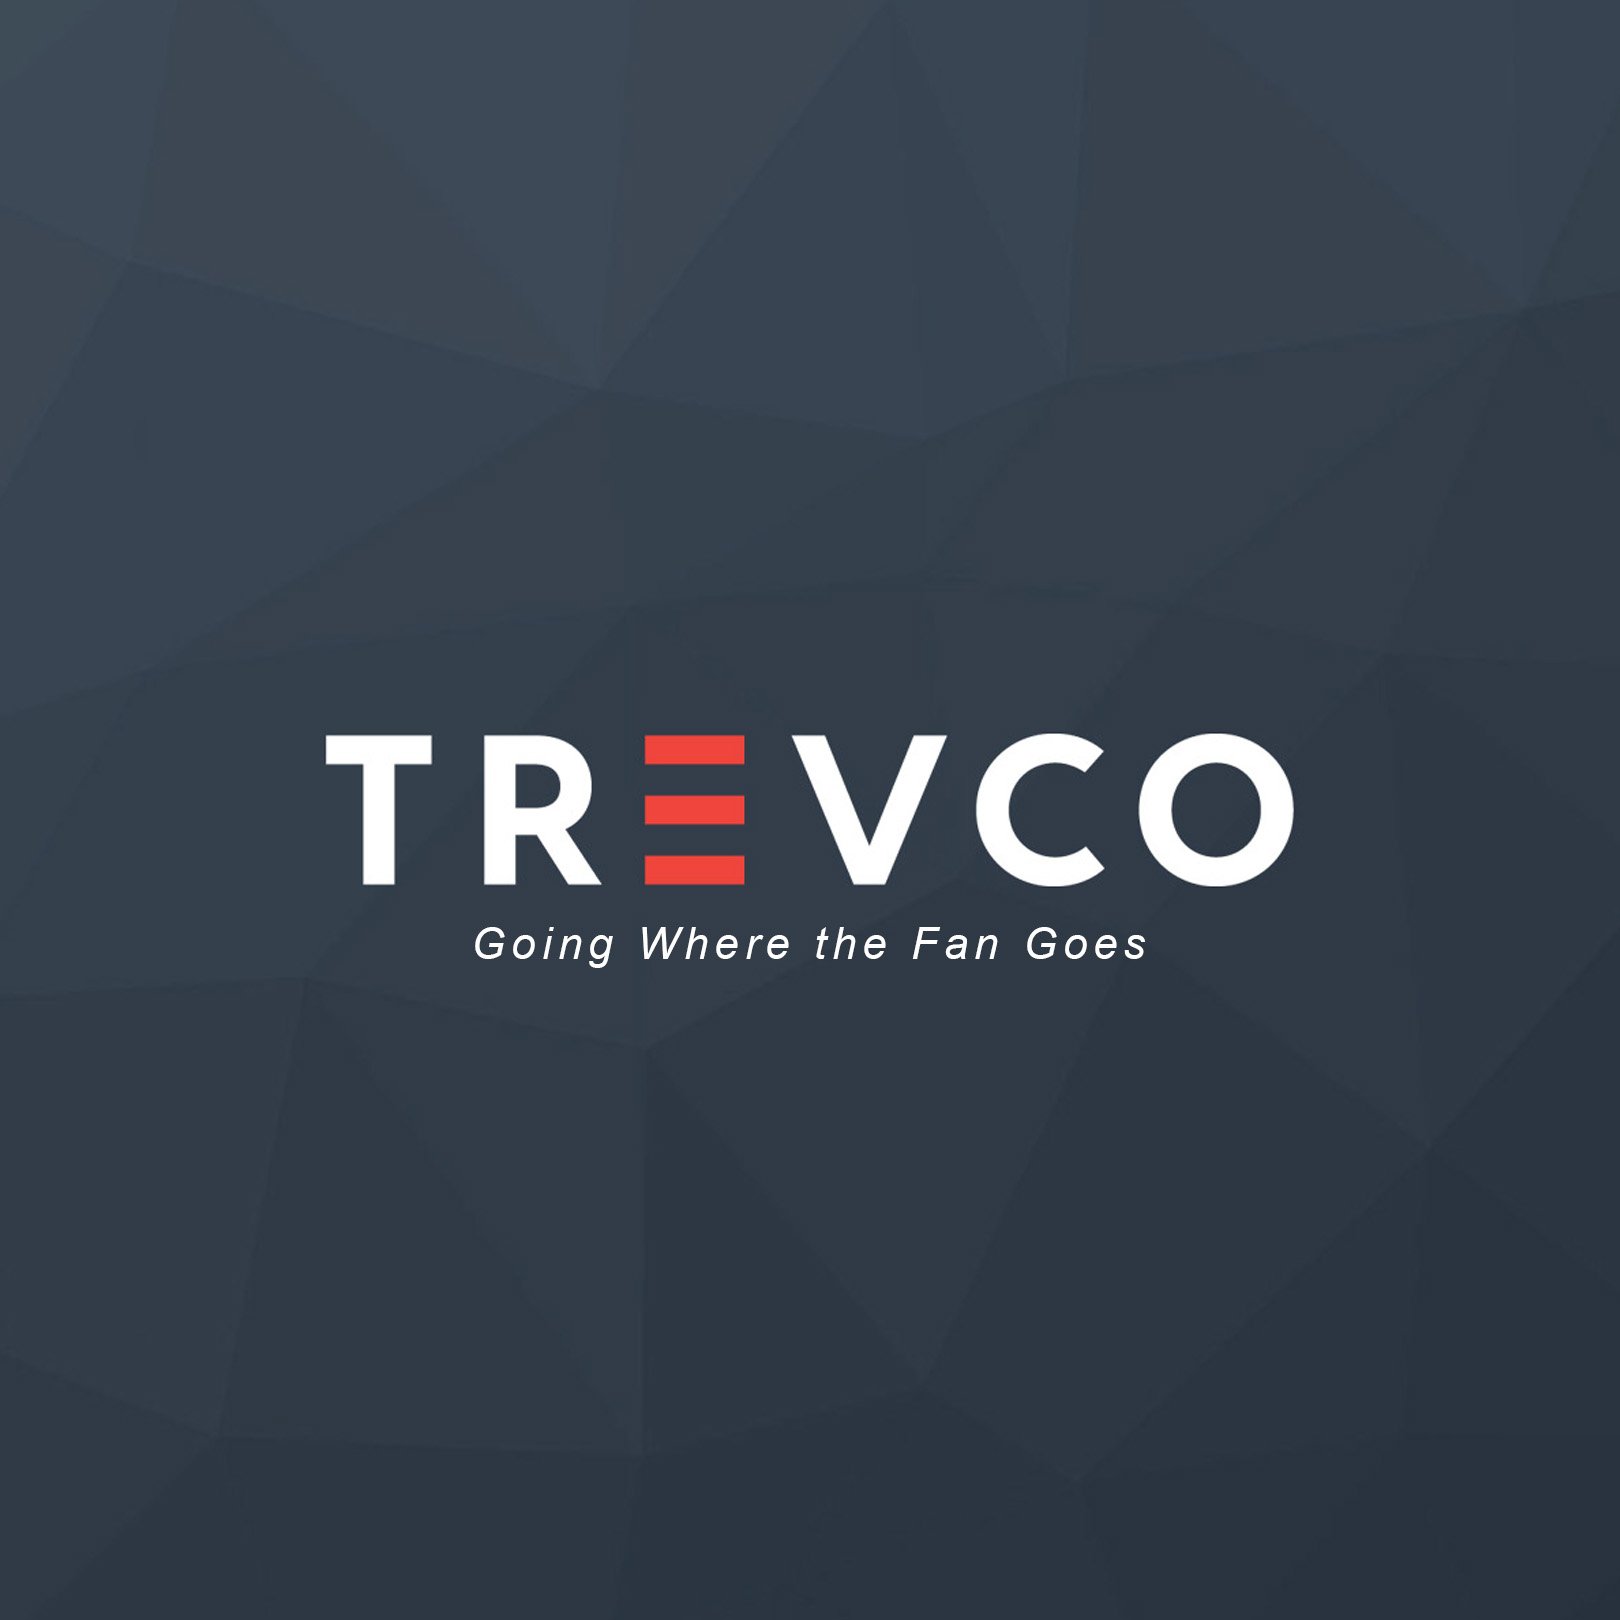 Trevco_AdSpec3.jpg